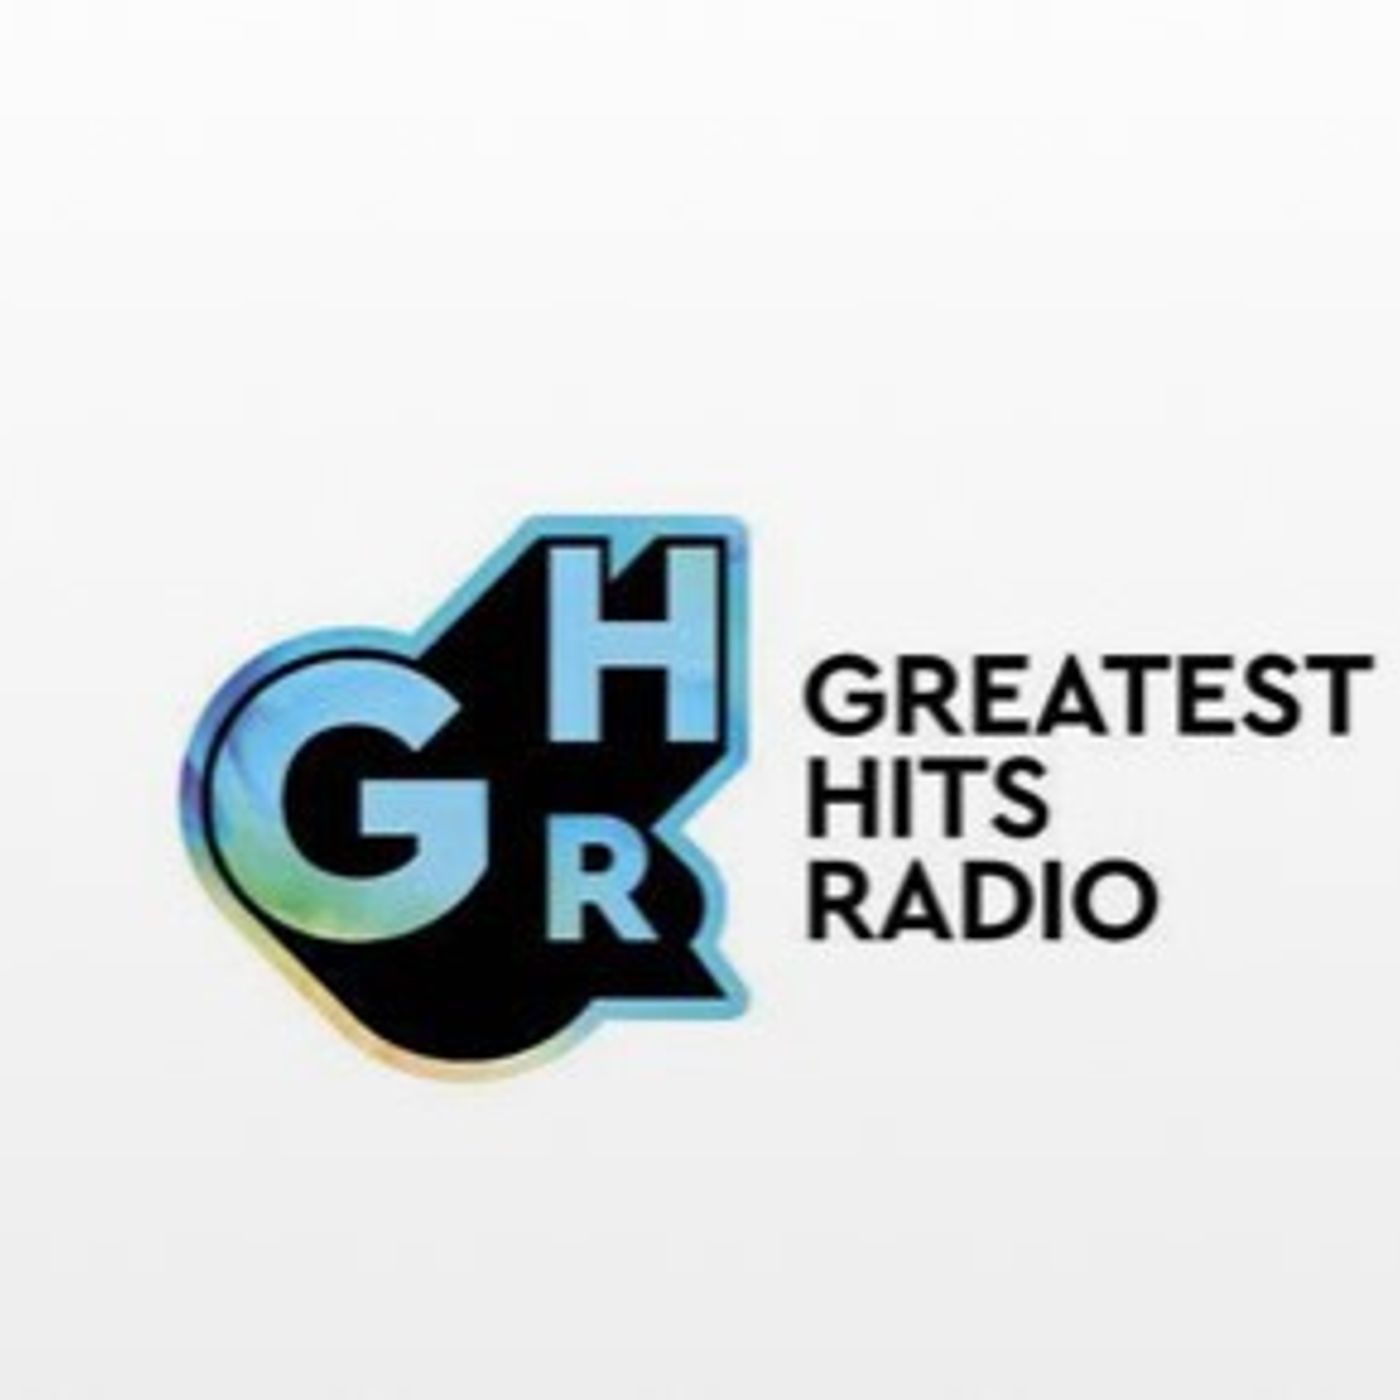 1563: Greatest Hits Radio launch (Lancs) - 2019